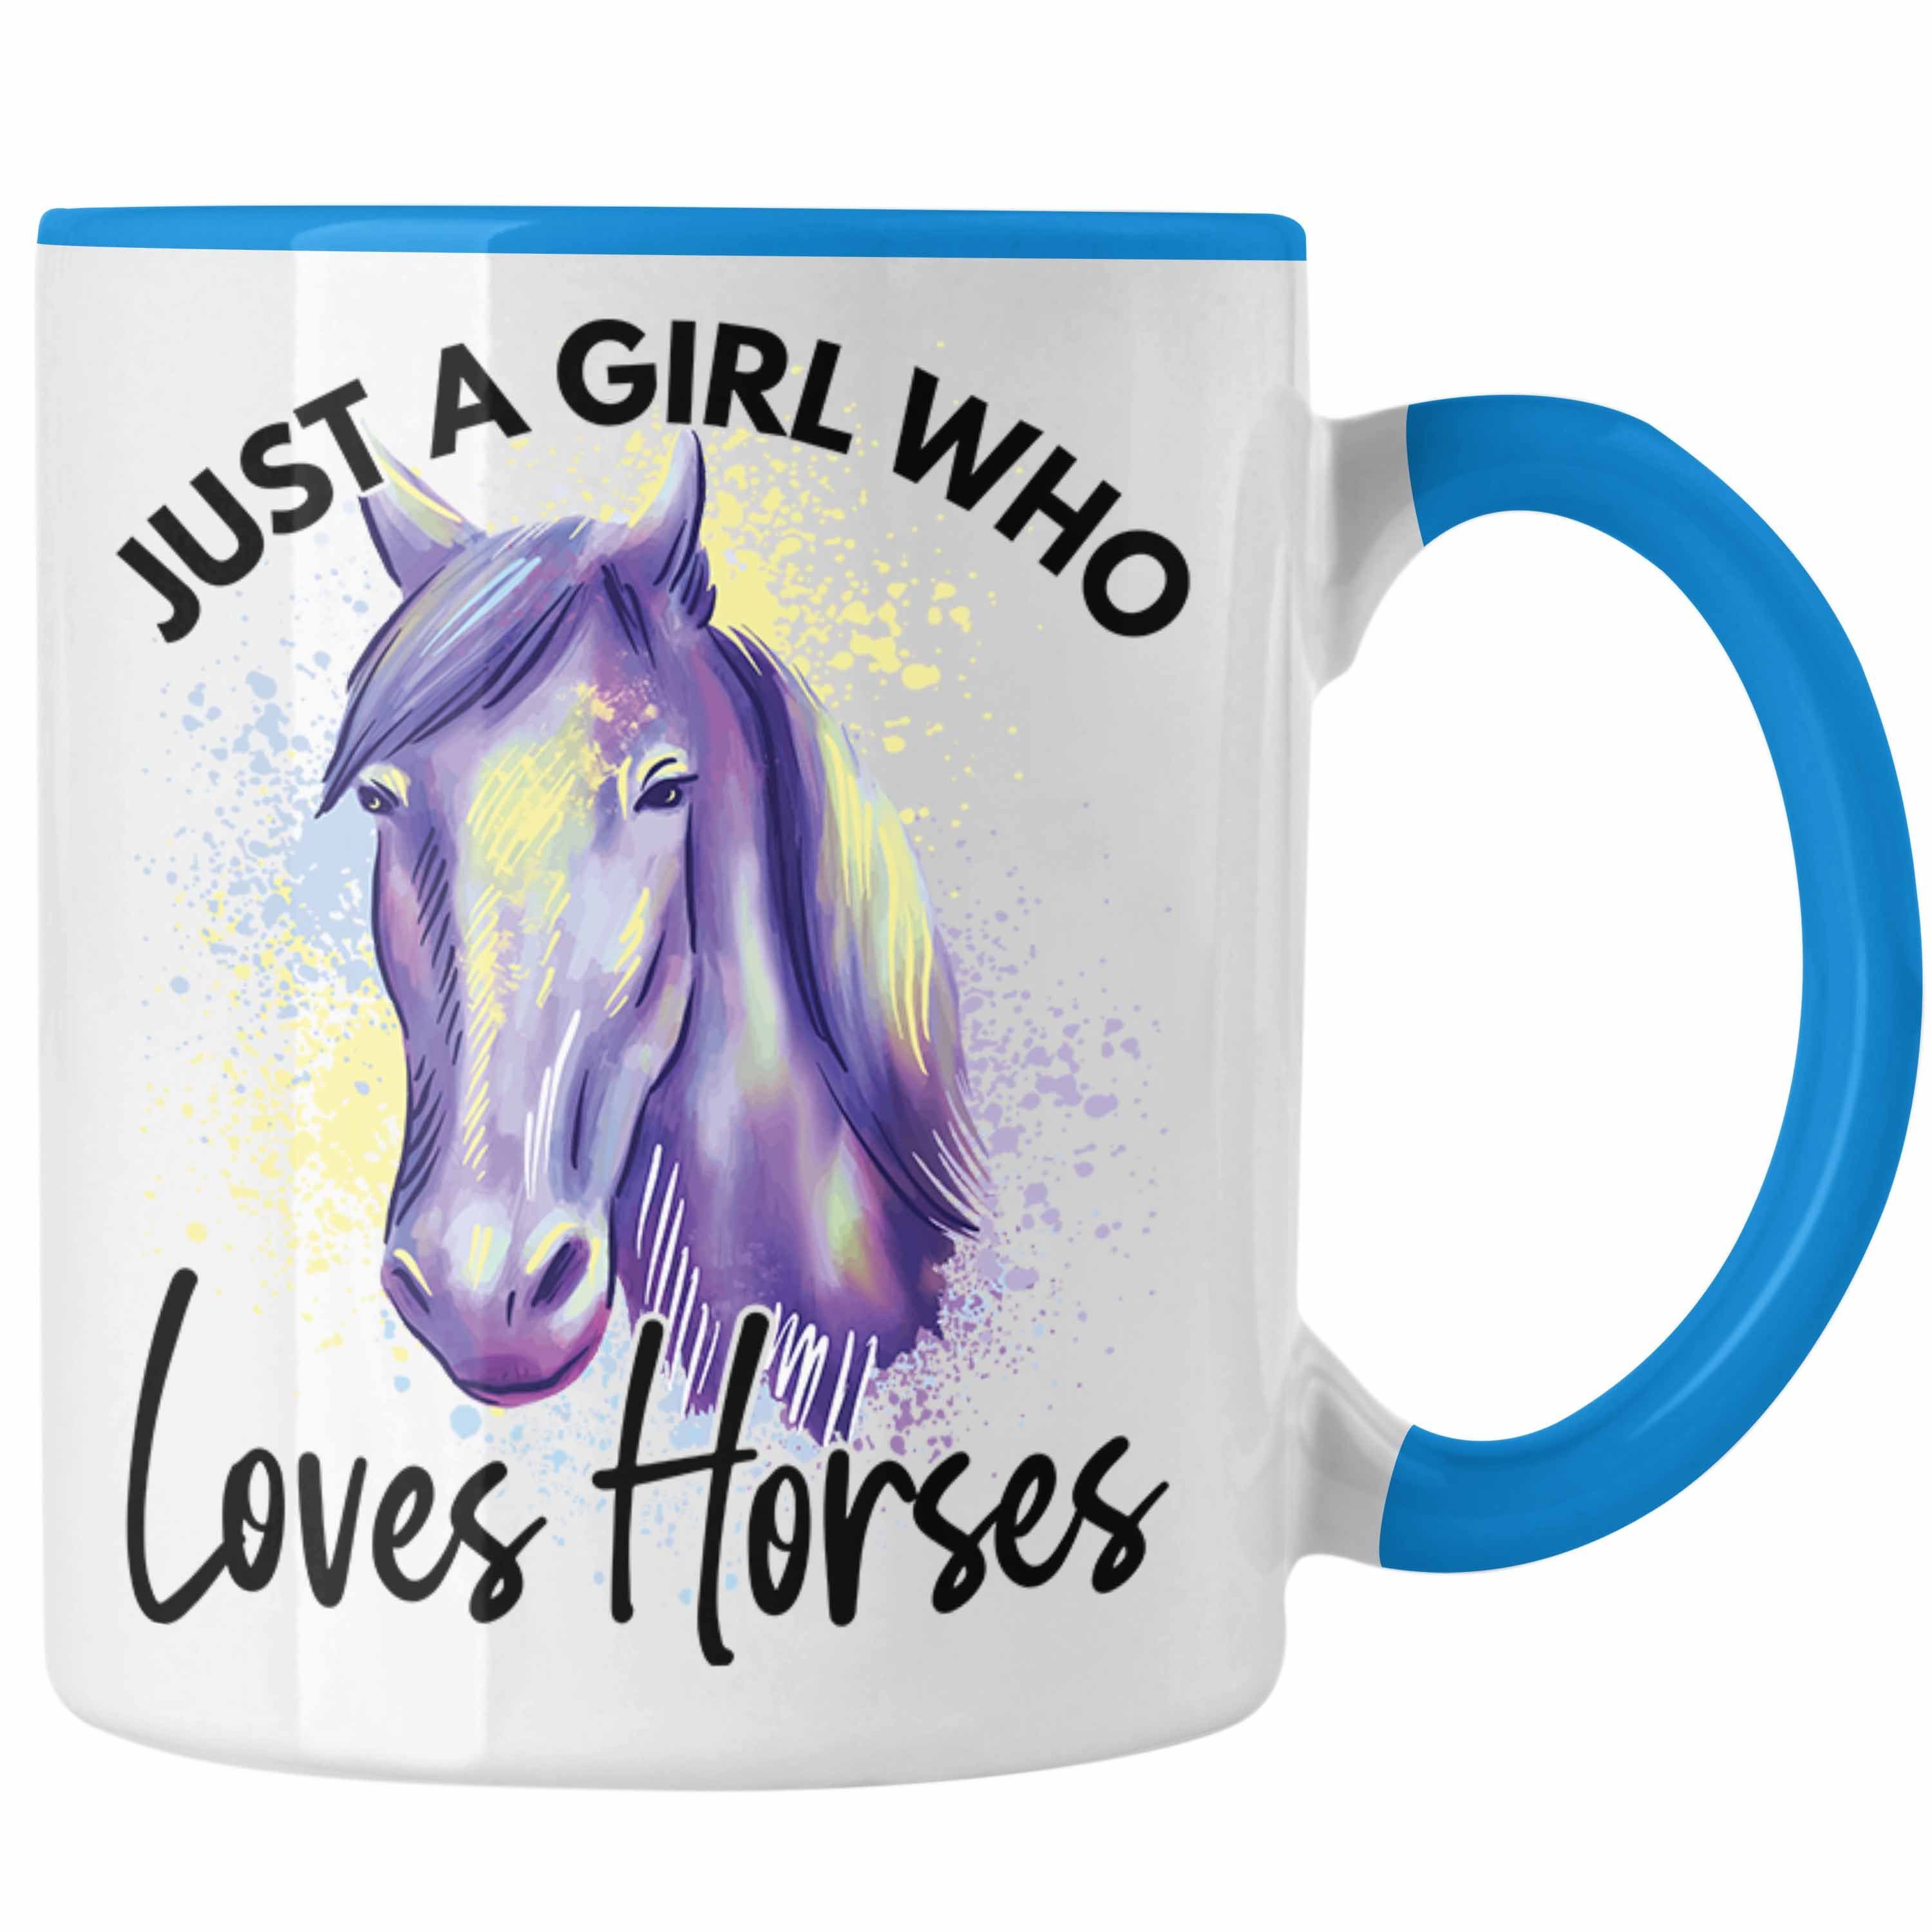 - Reiter Lustige Blau A Horses Pferde Reiterin Trendation Girl Geschenkidee Loves Just Who Sprüche Mädchen Tasse Tasse Geschenk Trendation Pferde